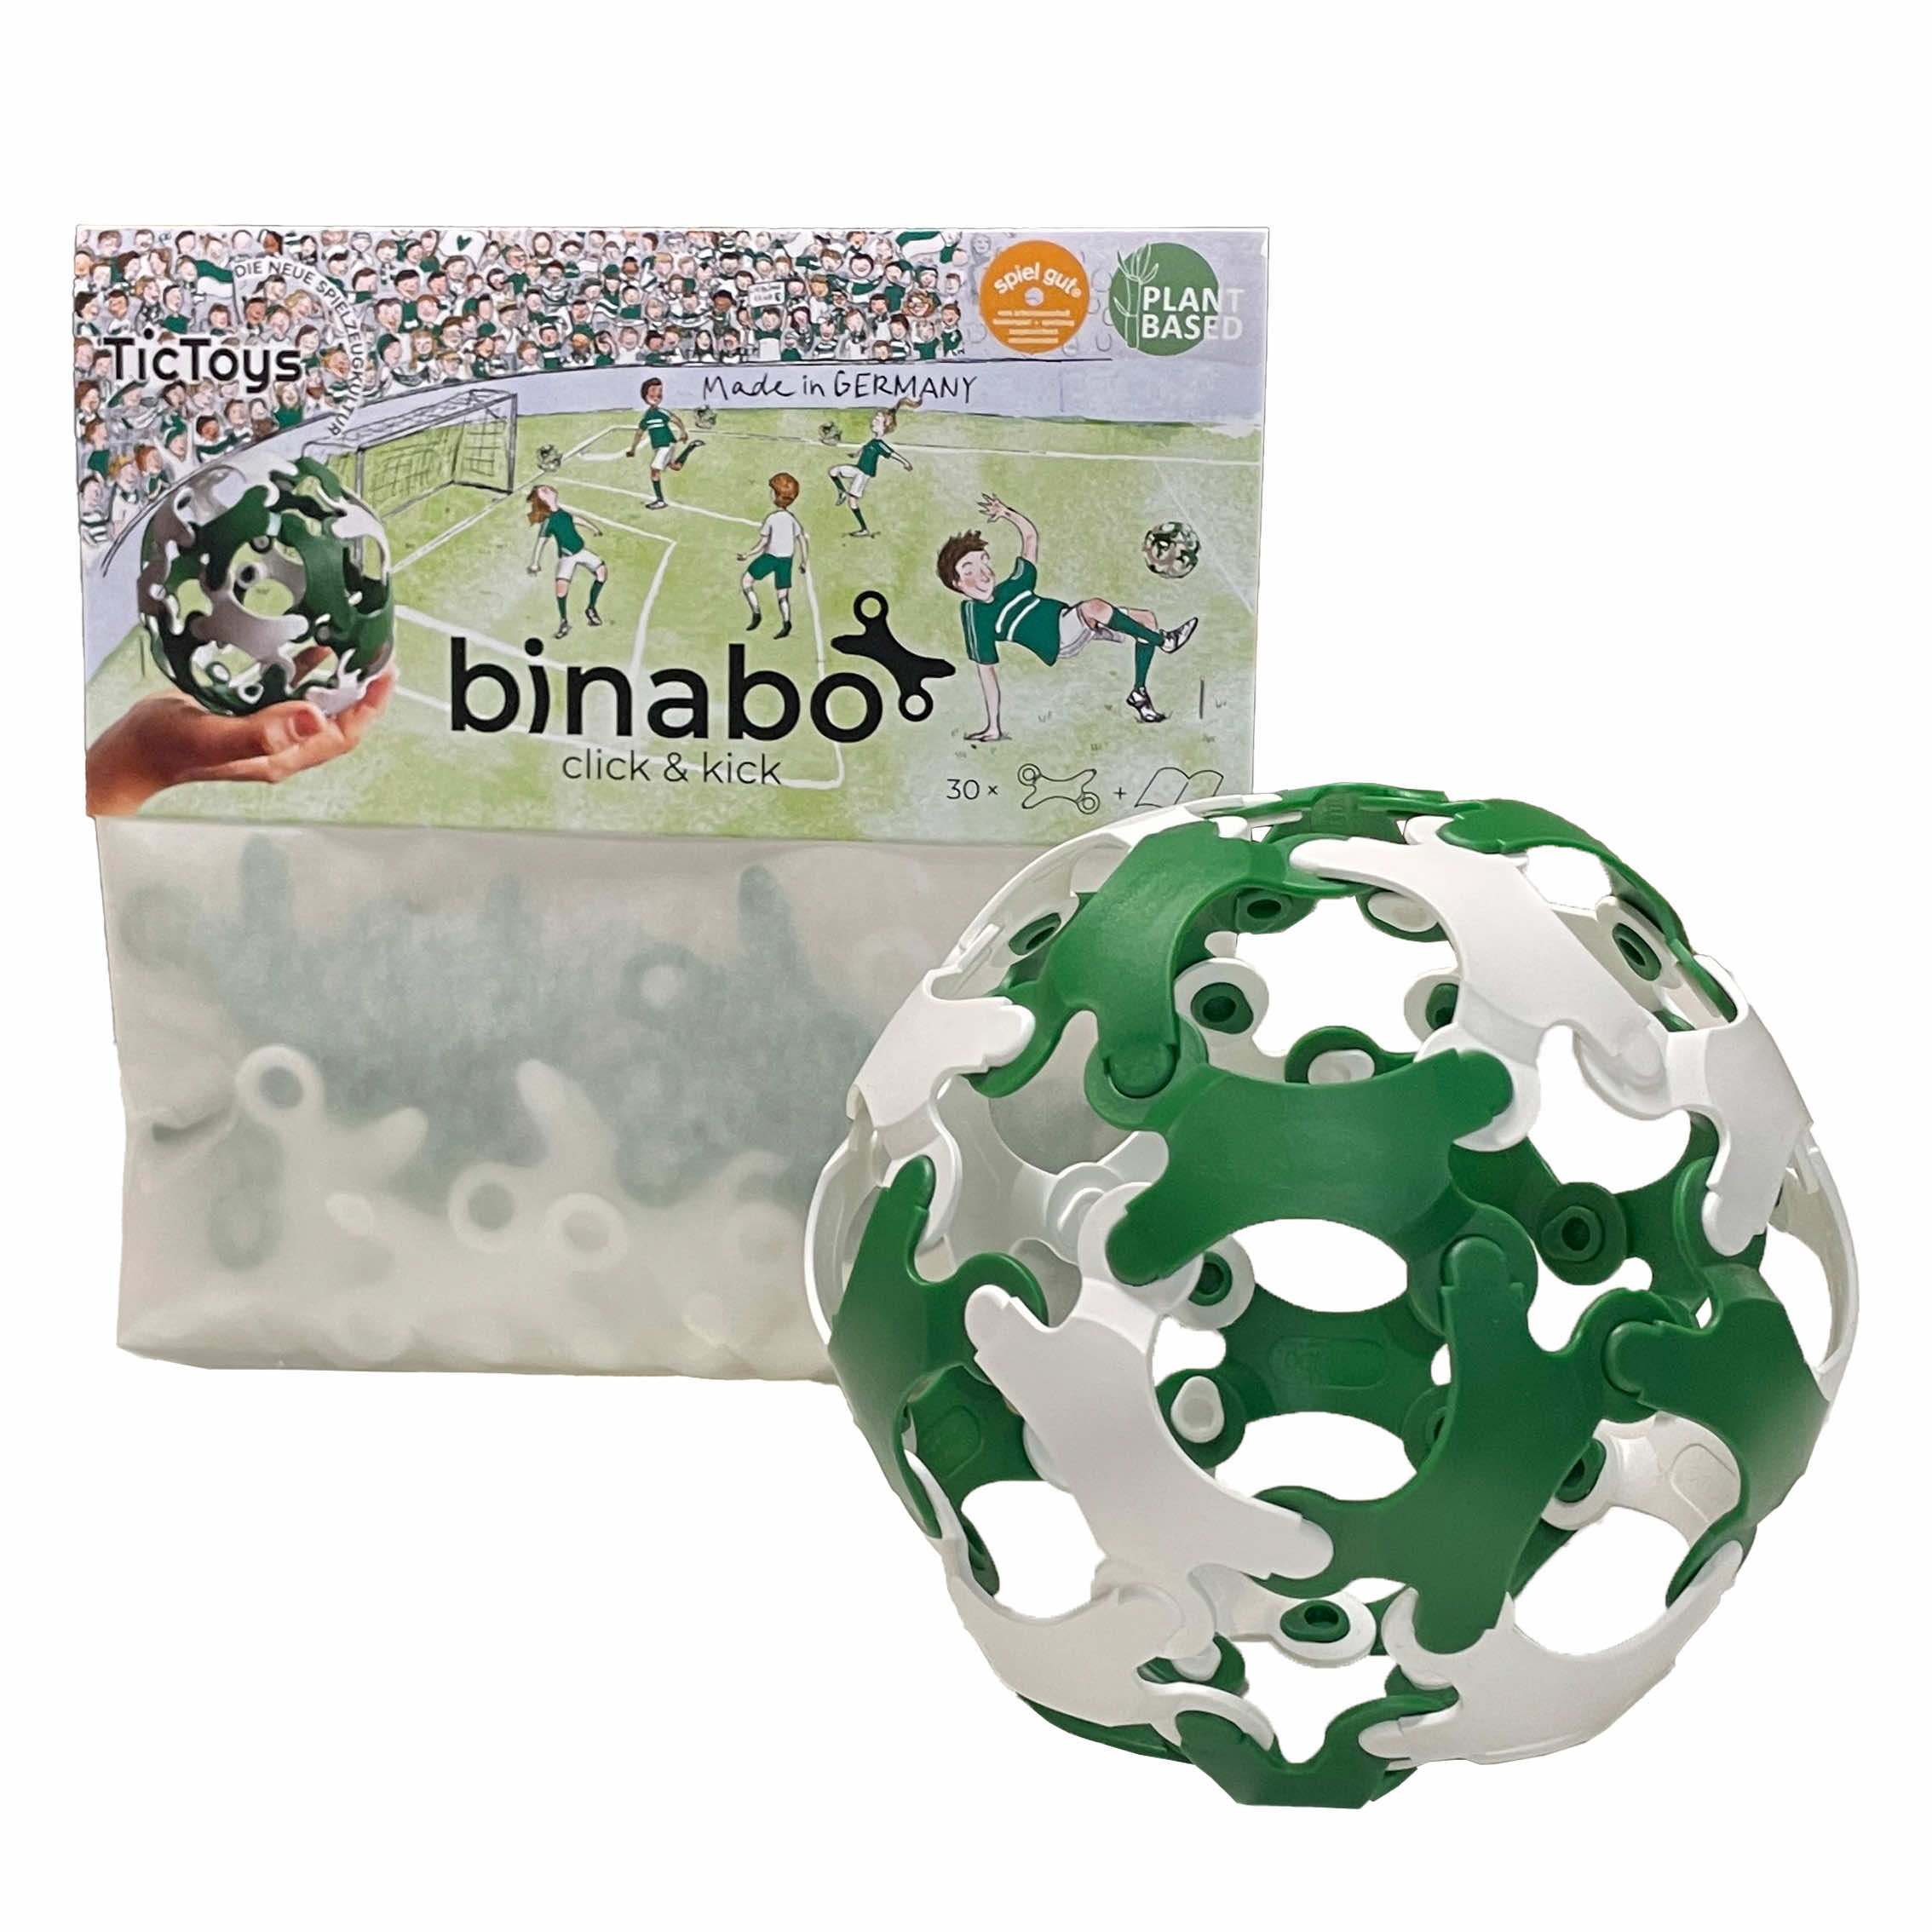 Binabo „click & kick“ grün & weiß